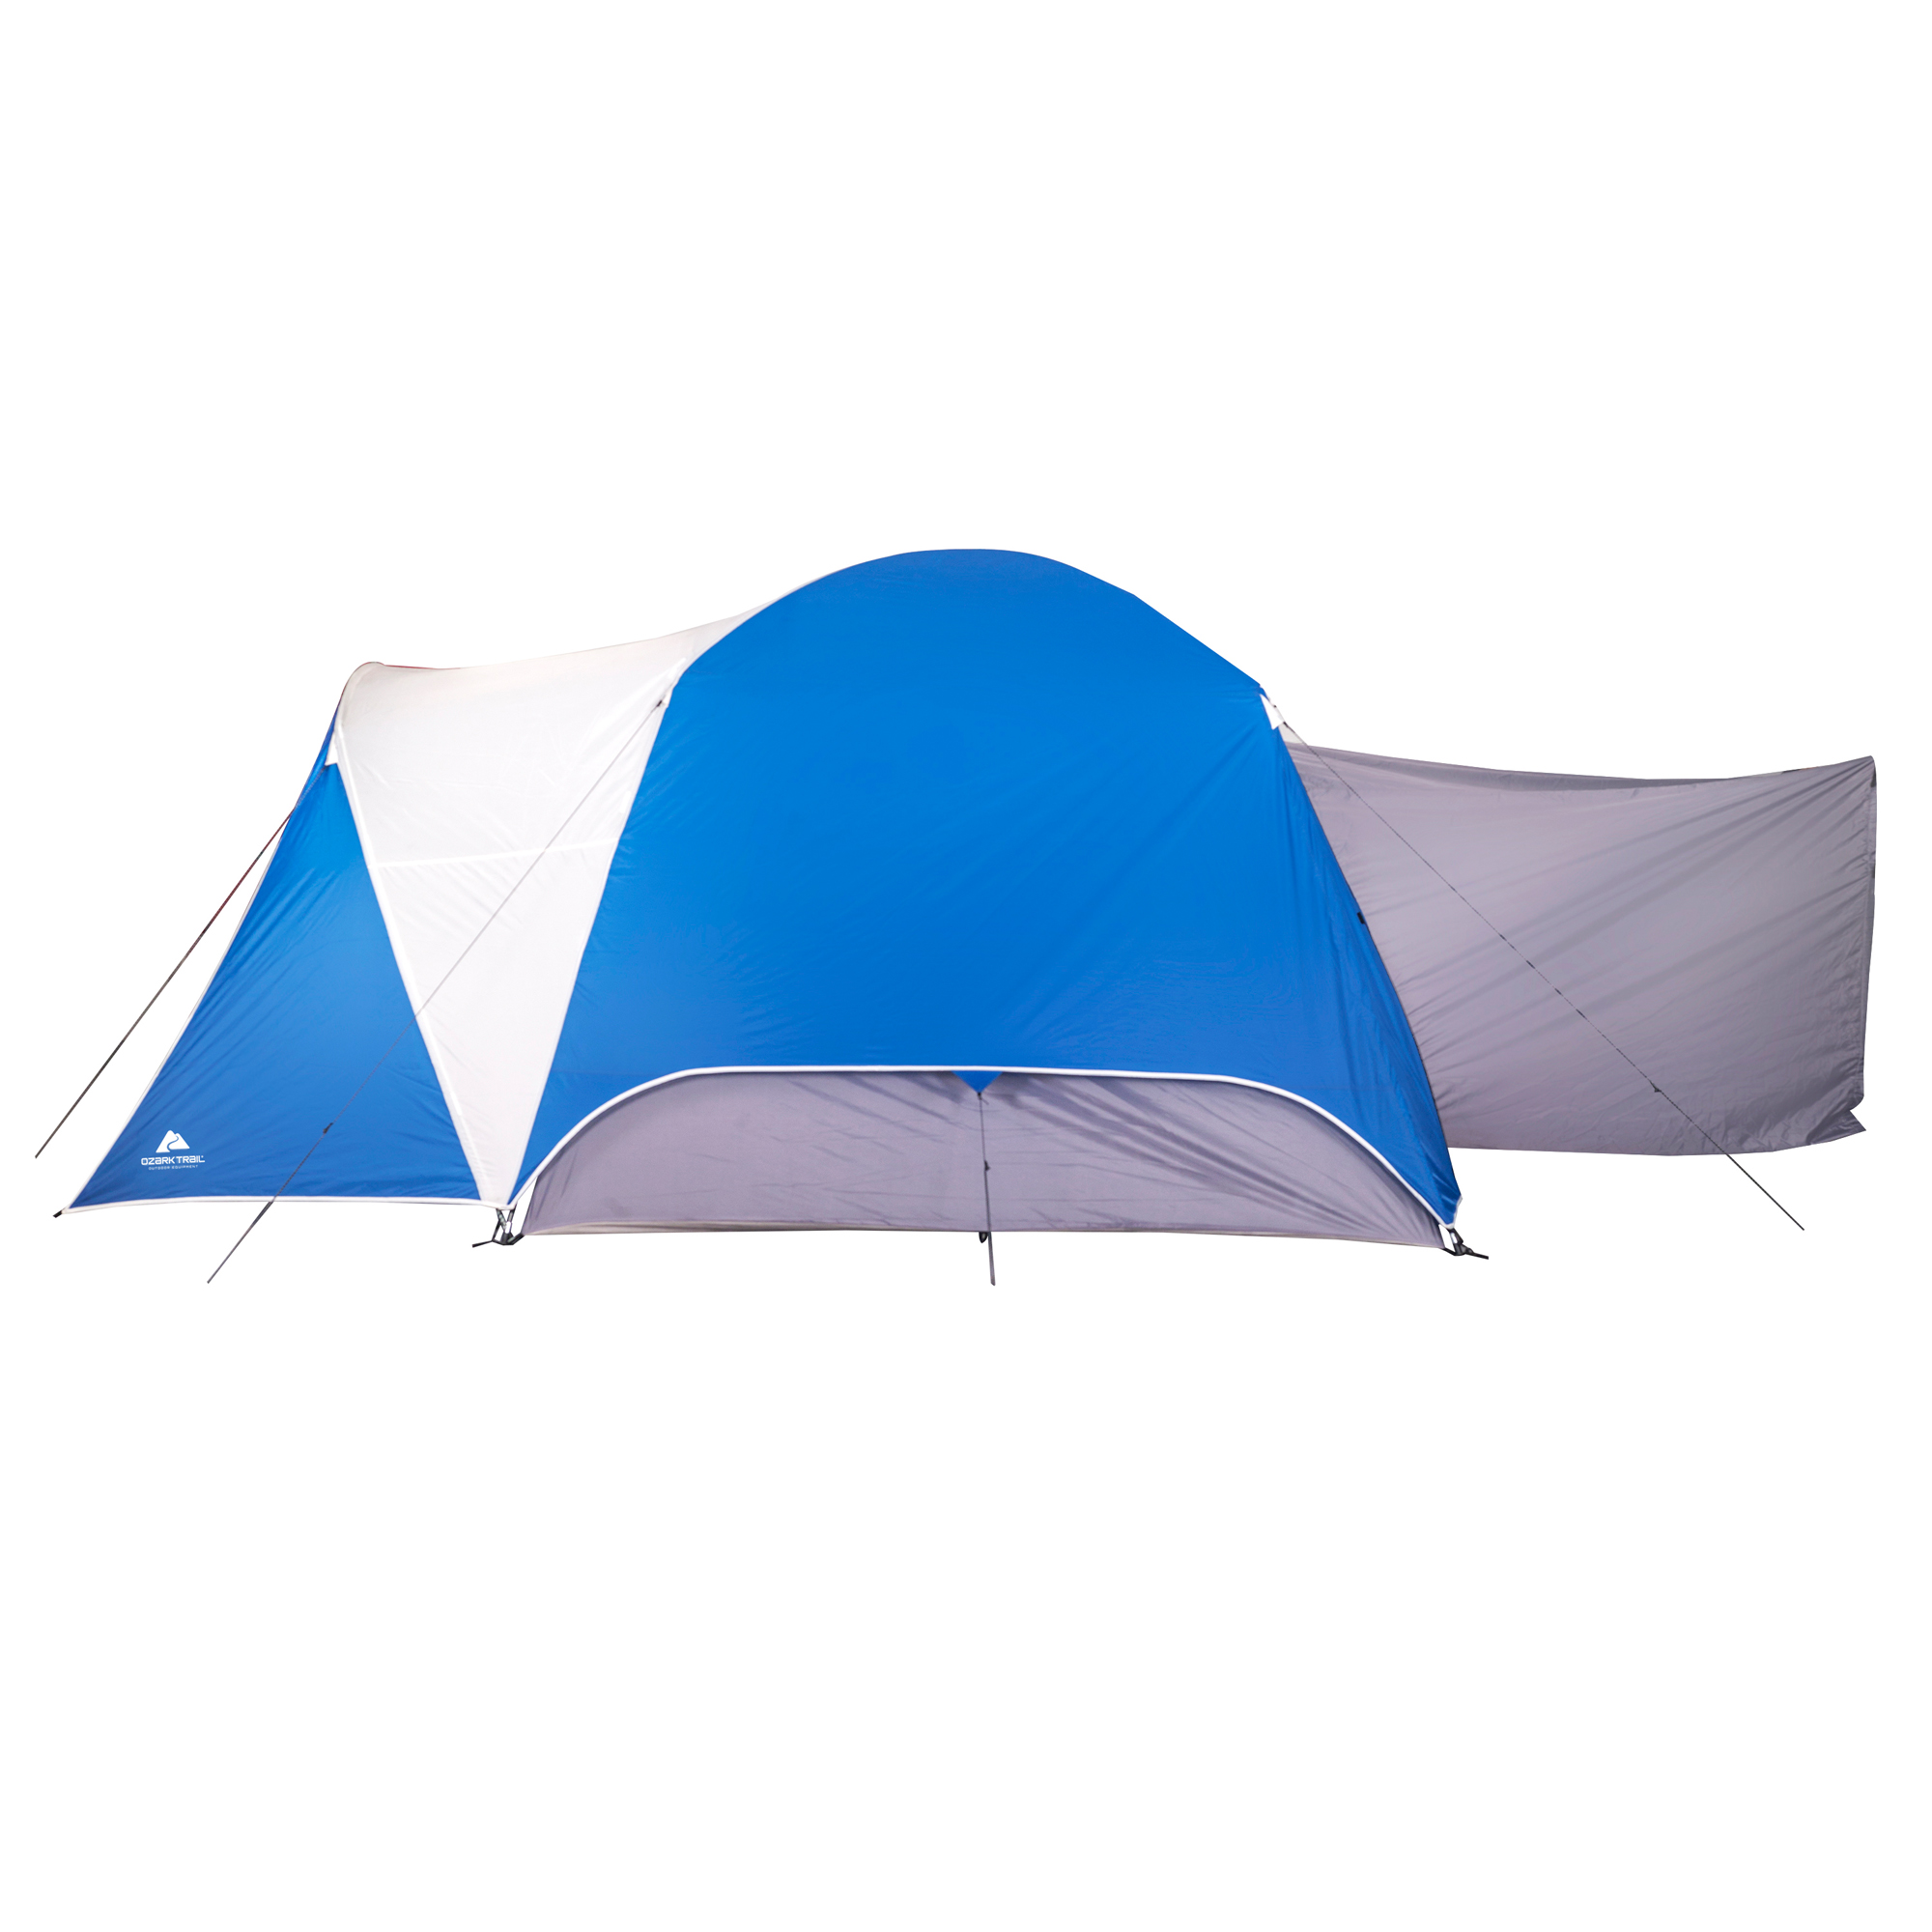 Ozark Trail 5-Person Dome Tent - image 3 of 10